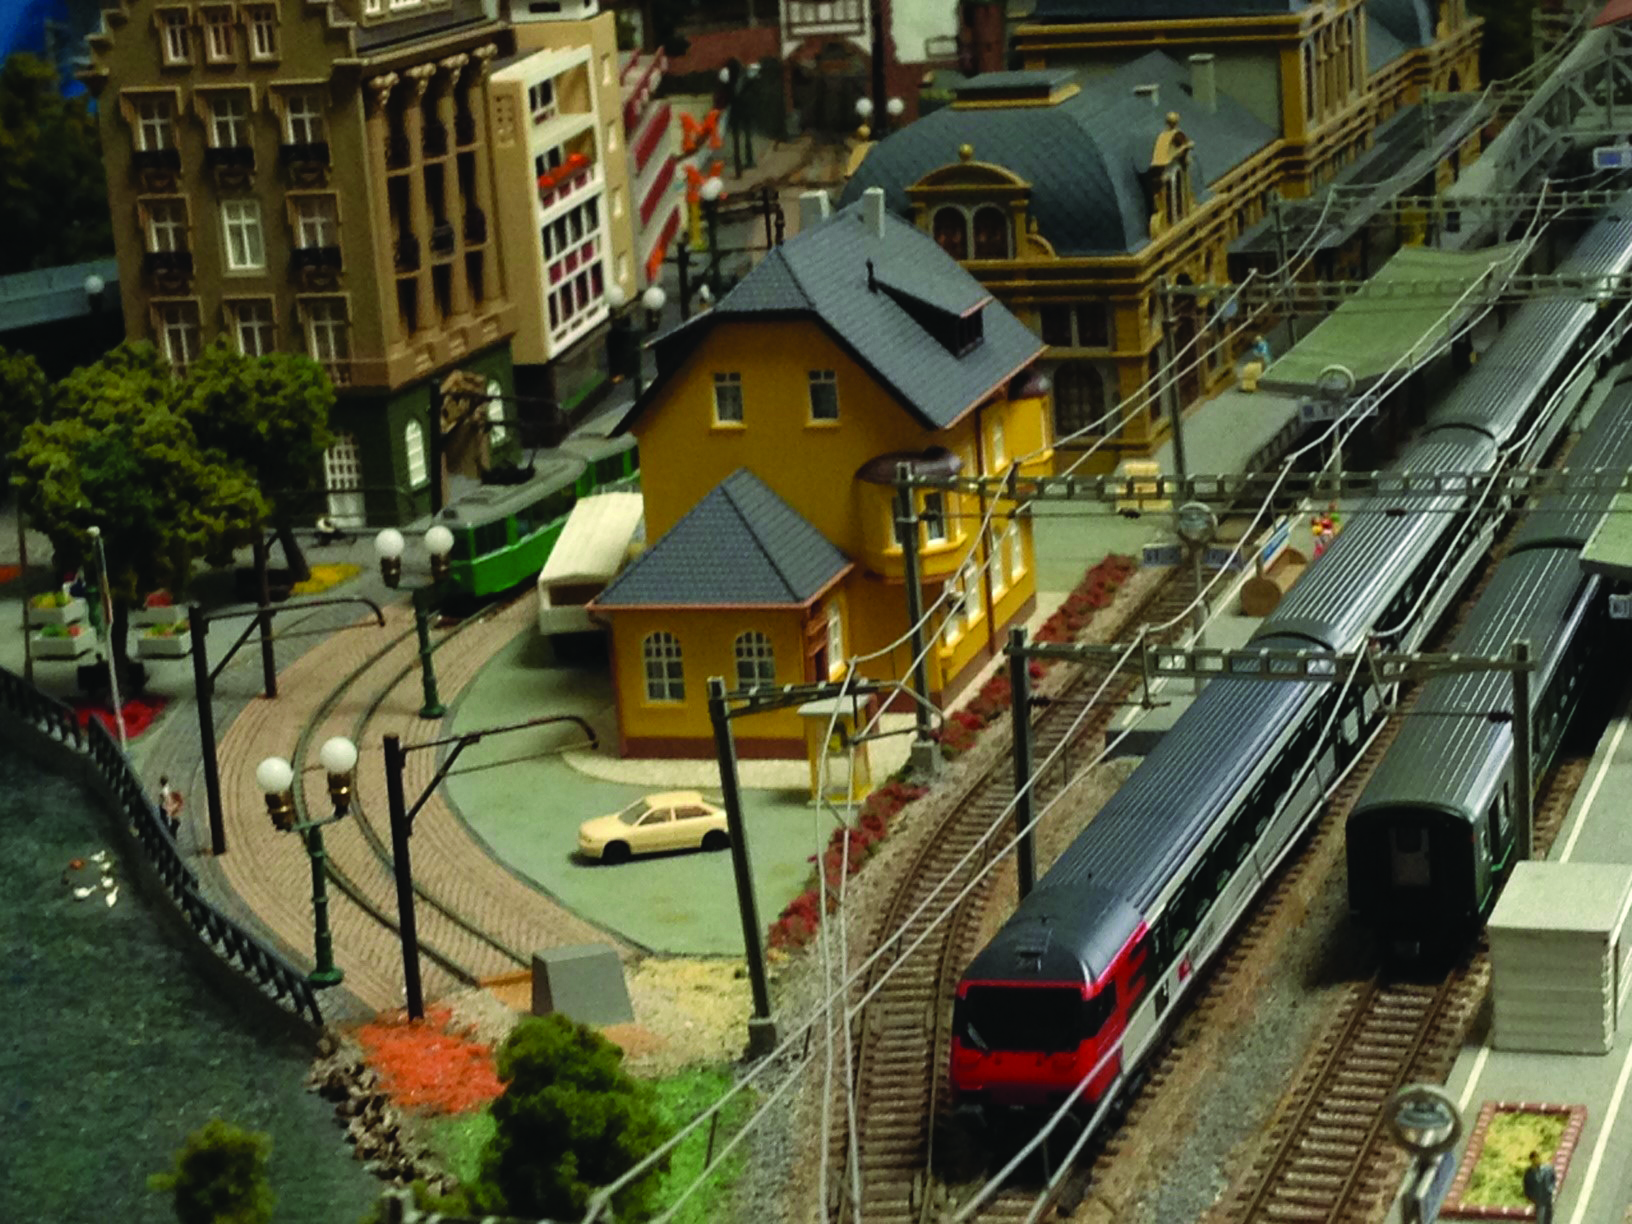 A model train built by Matsuzaki